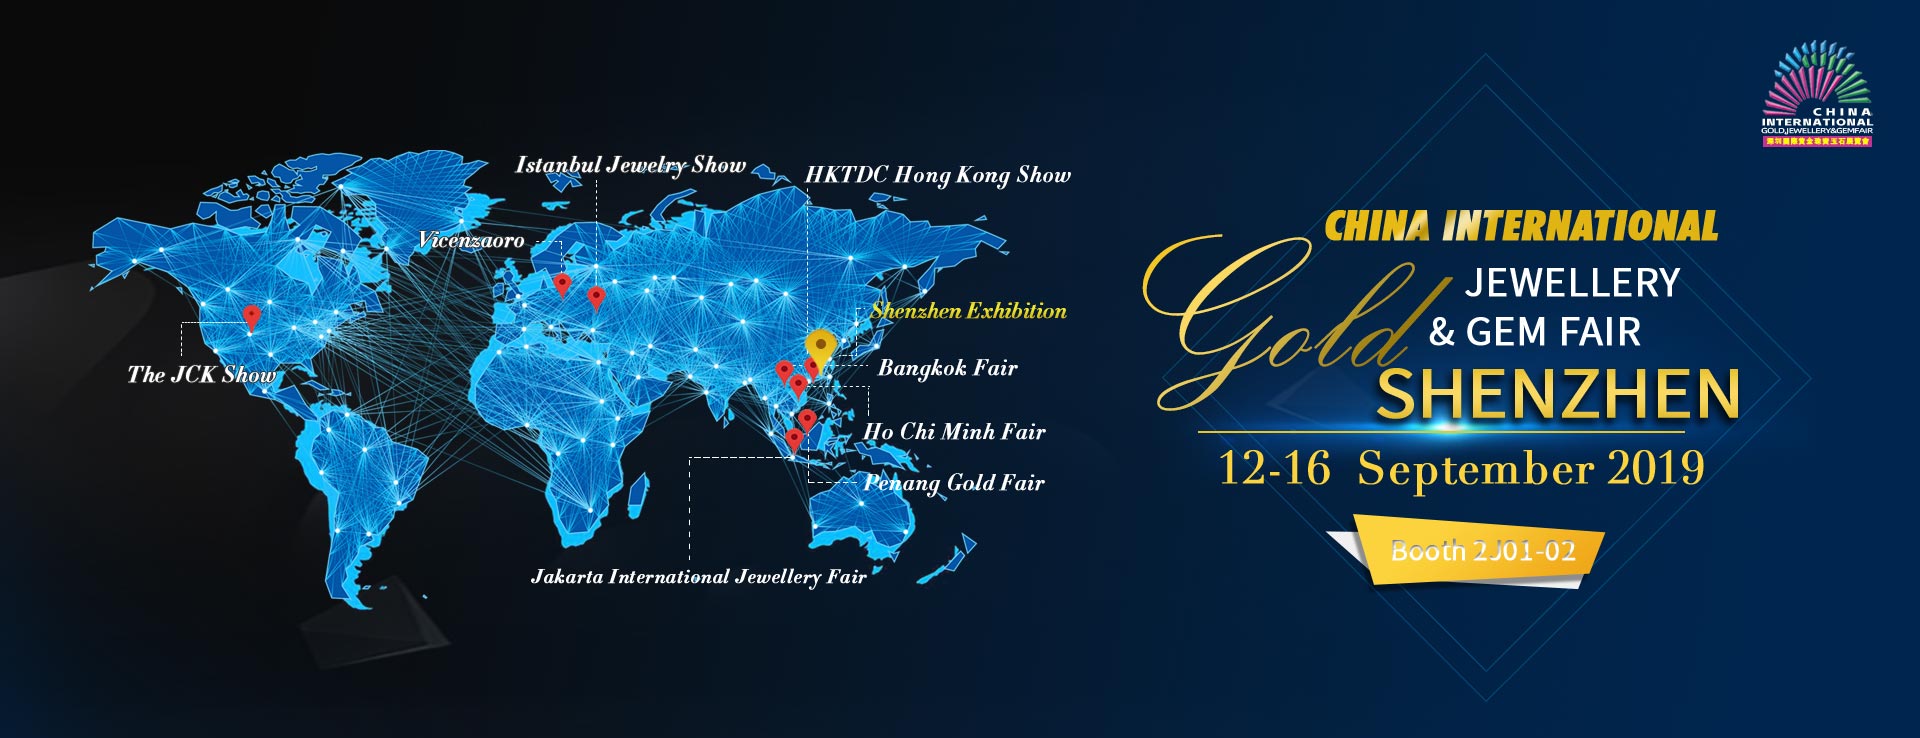 China international jewelry & gems fair Shenzhen